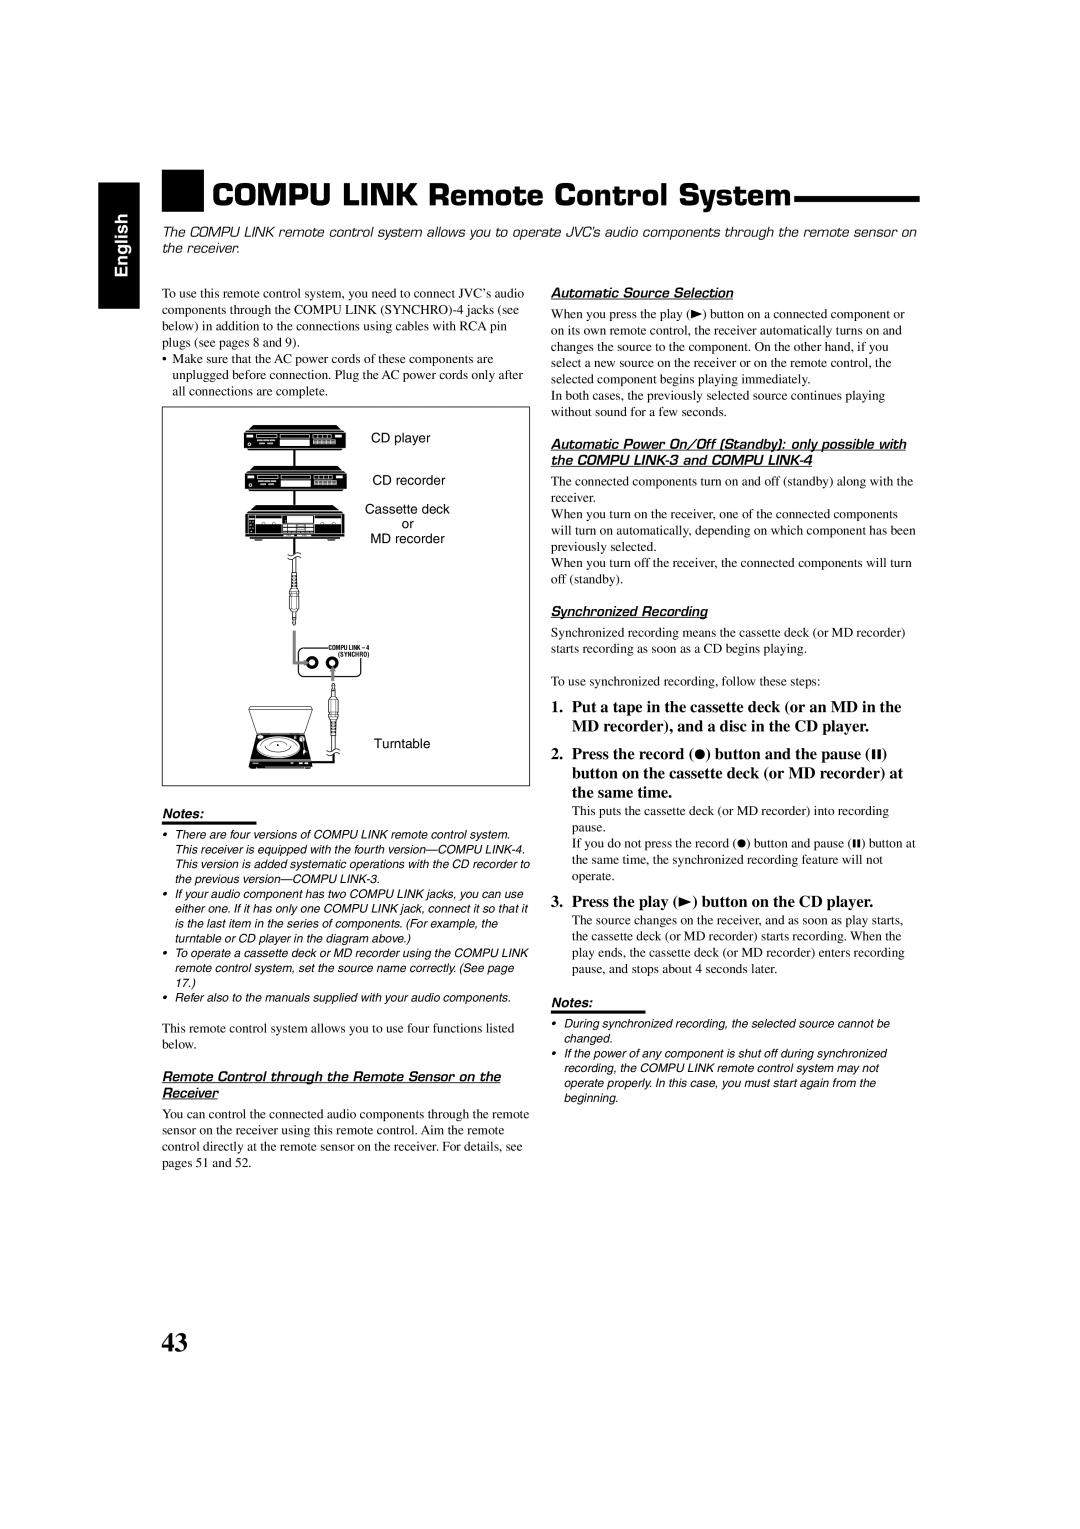 JVC RX-8020VBK manual COMPU LINK Remote Control System, English 